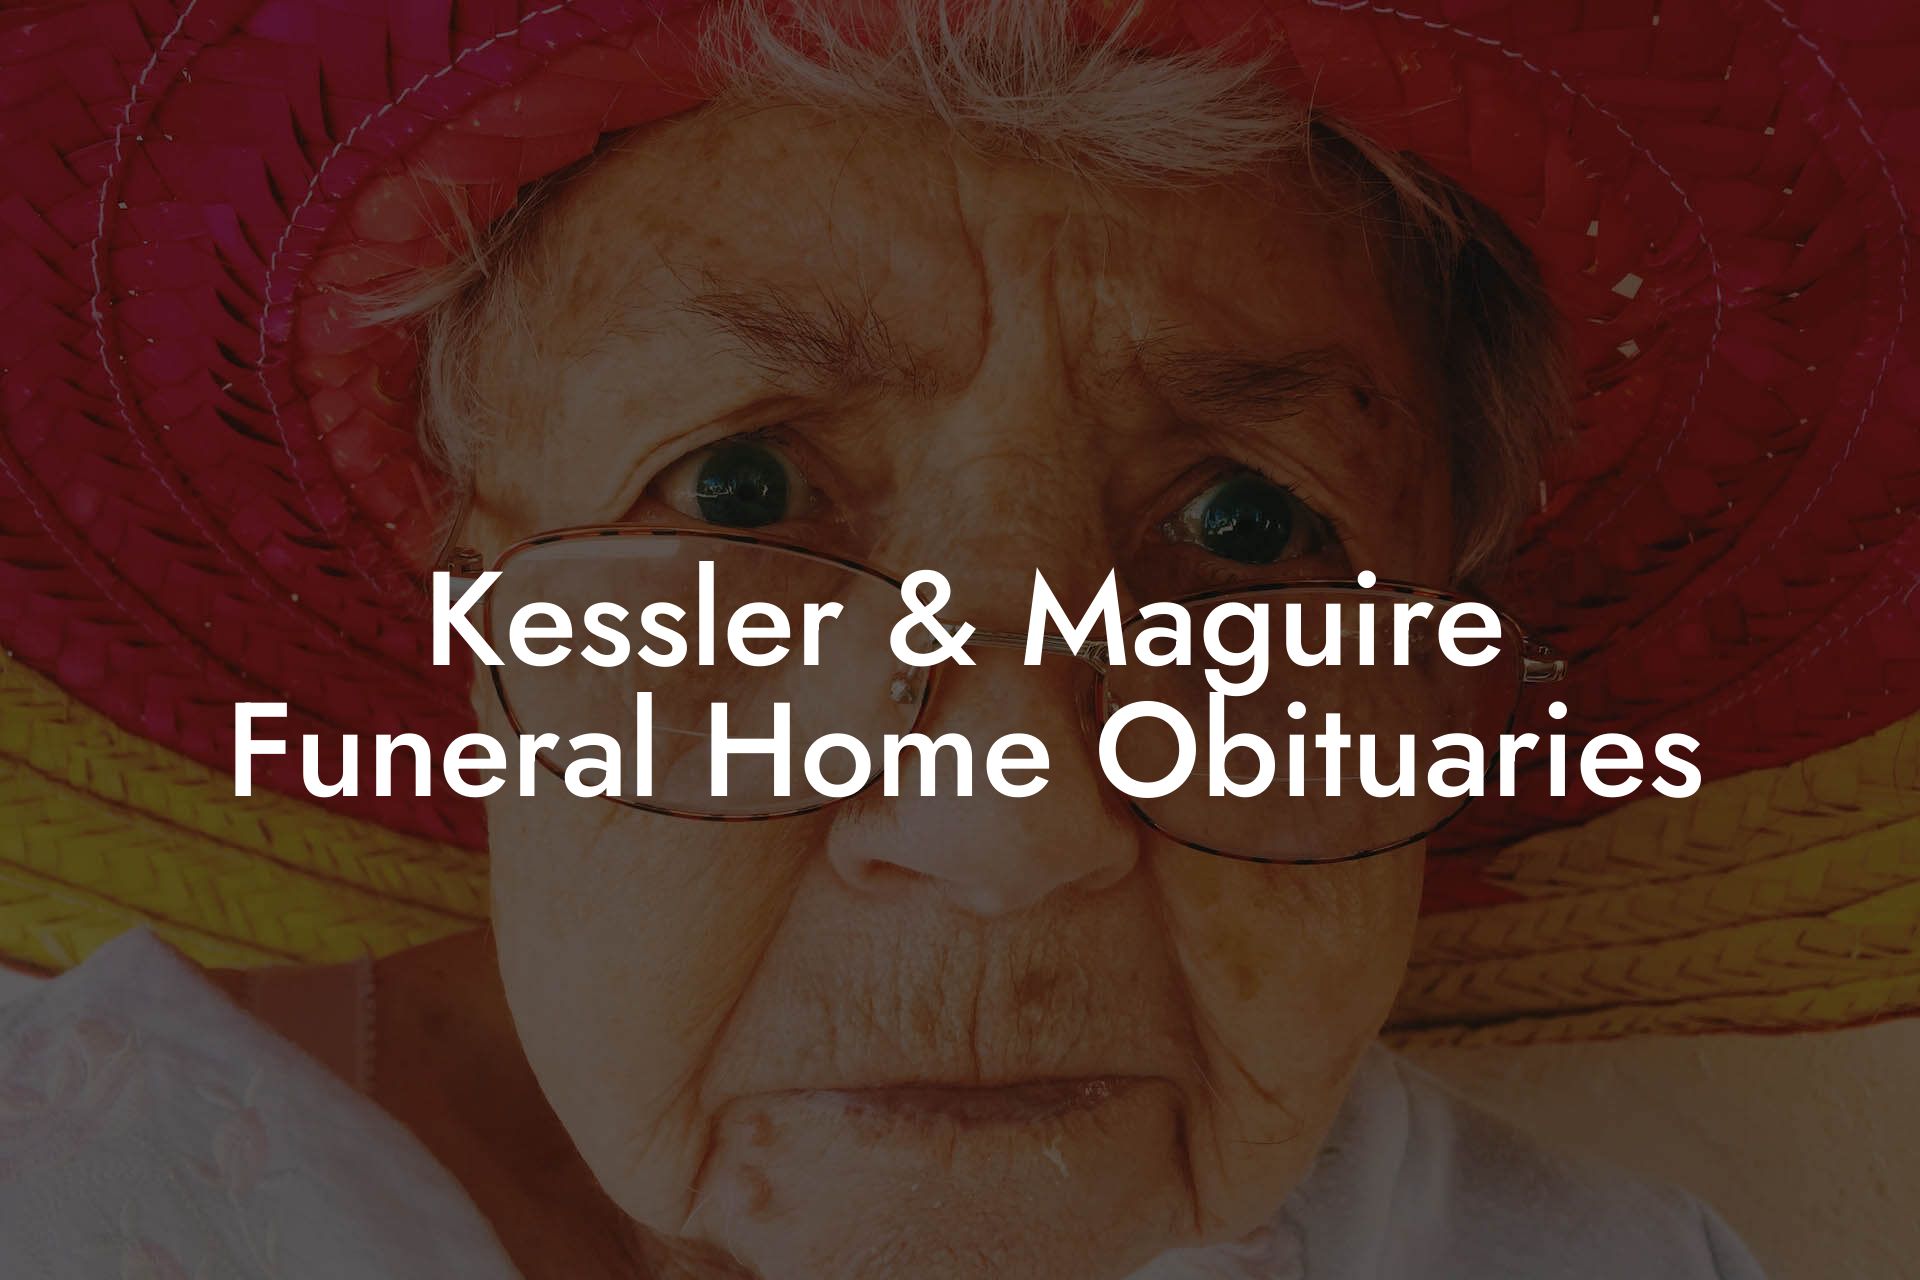 Kessler & Maguire Funeral Home Obituaries